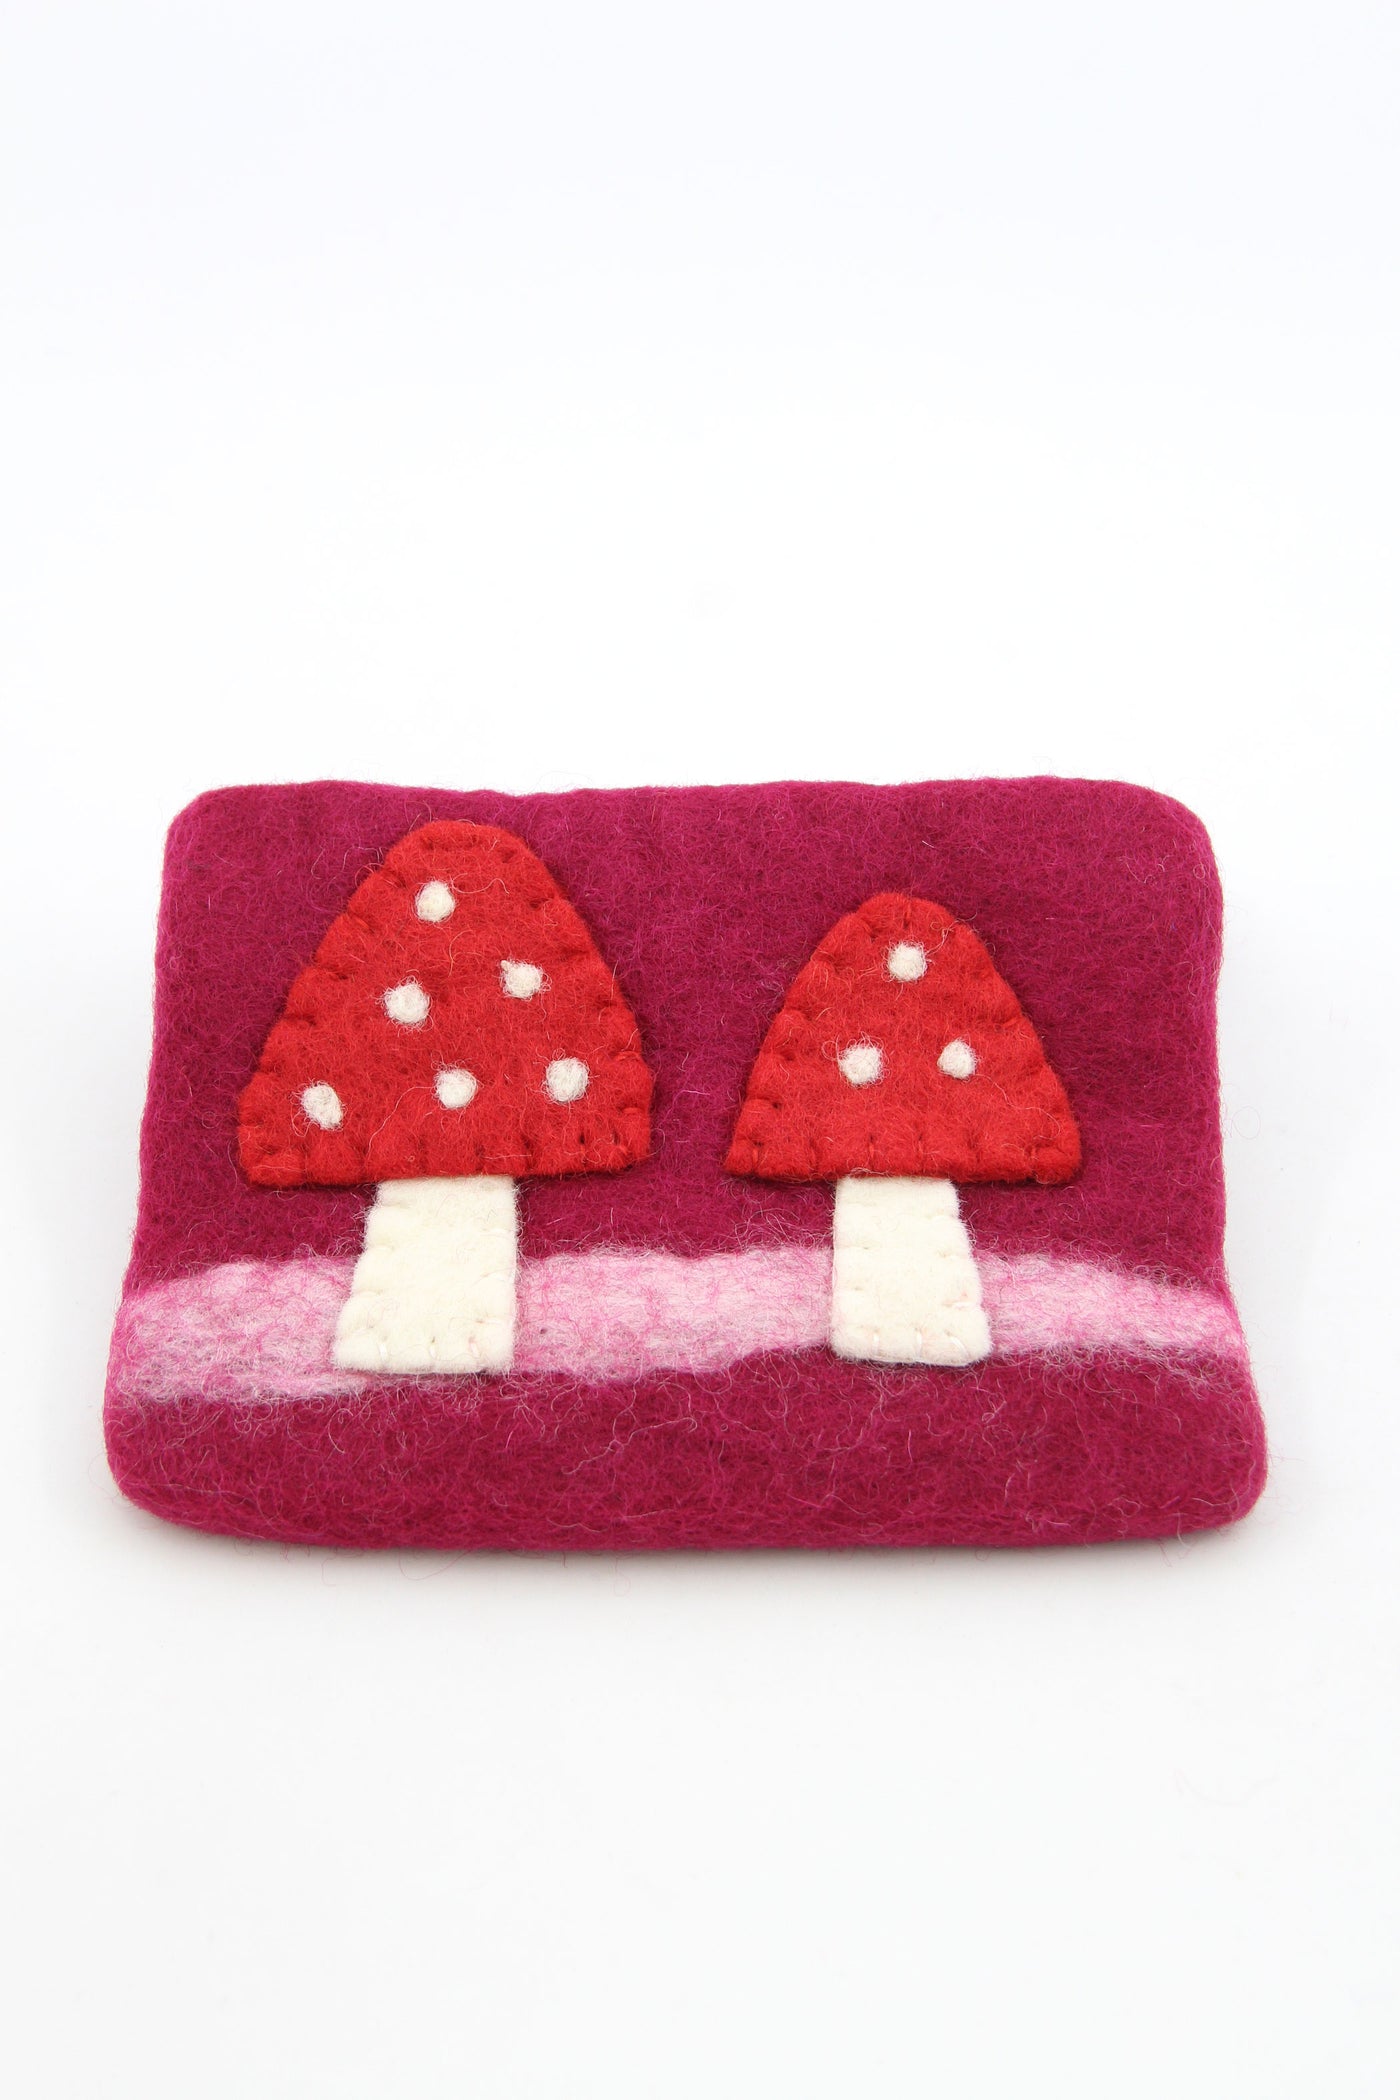 Pink Mushroom Felted Wool Pouch, Coin Purse w/ Zipper, Fair Trade from Nepal